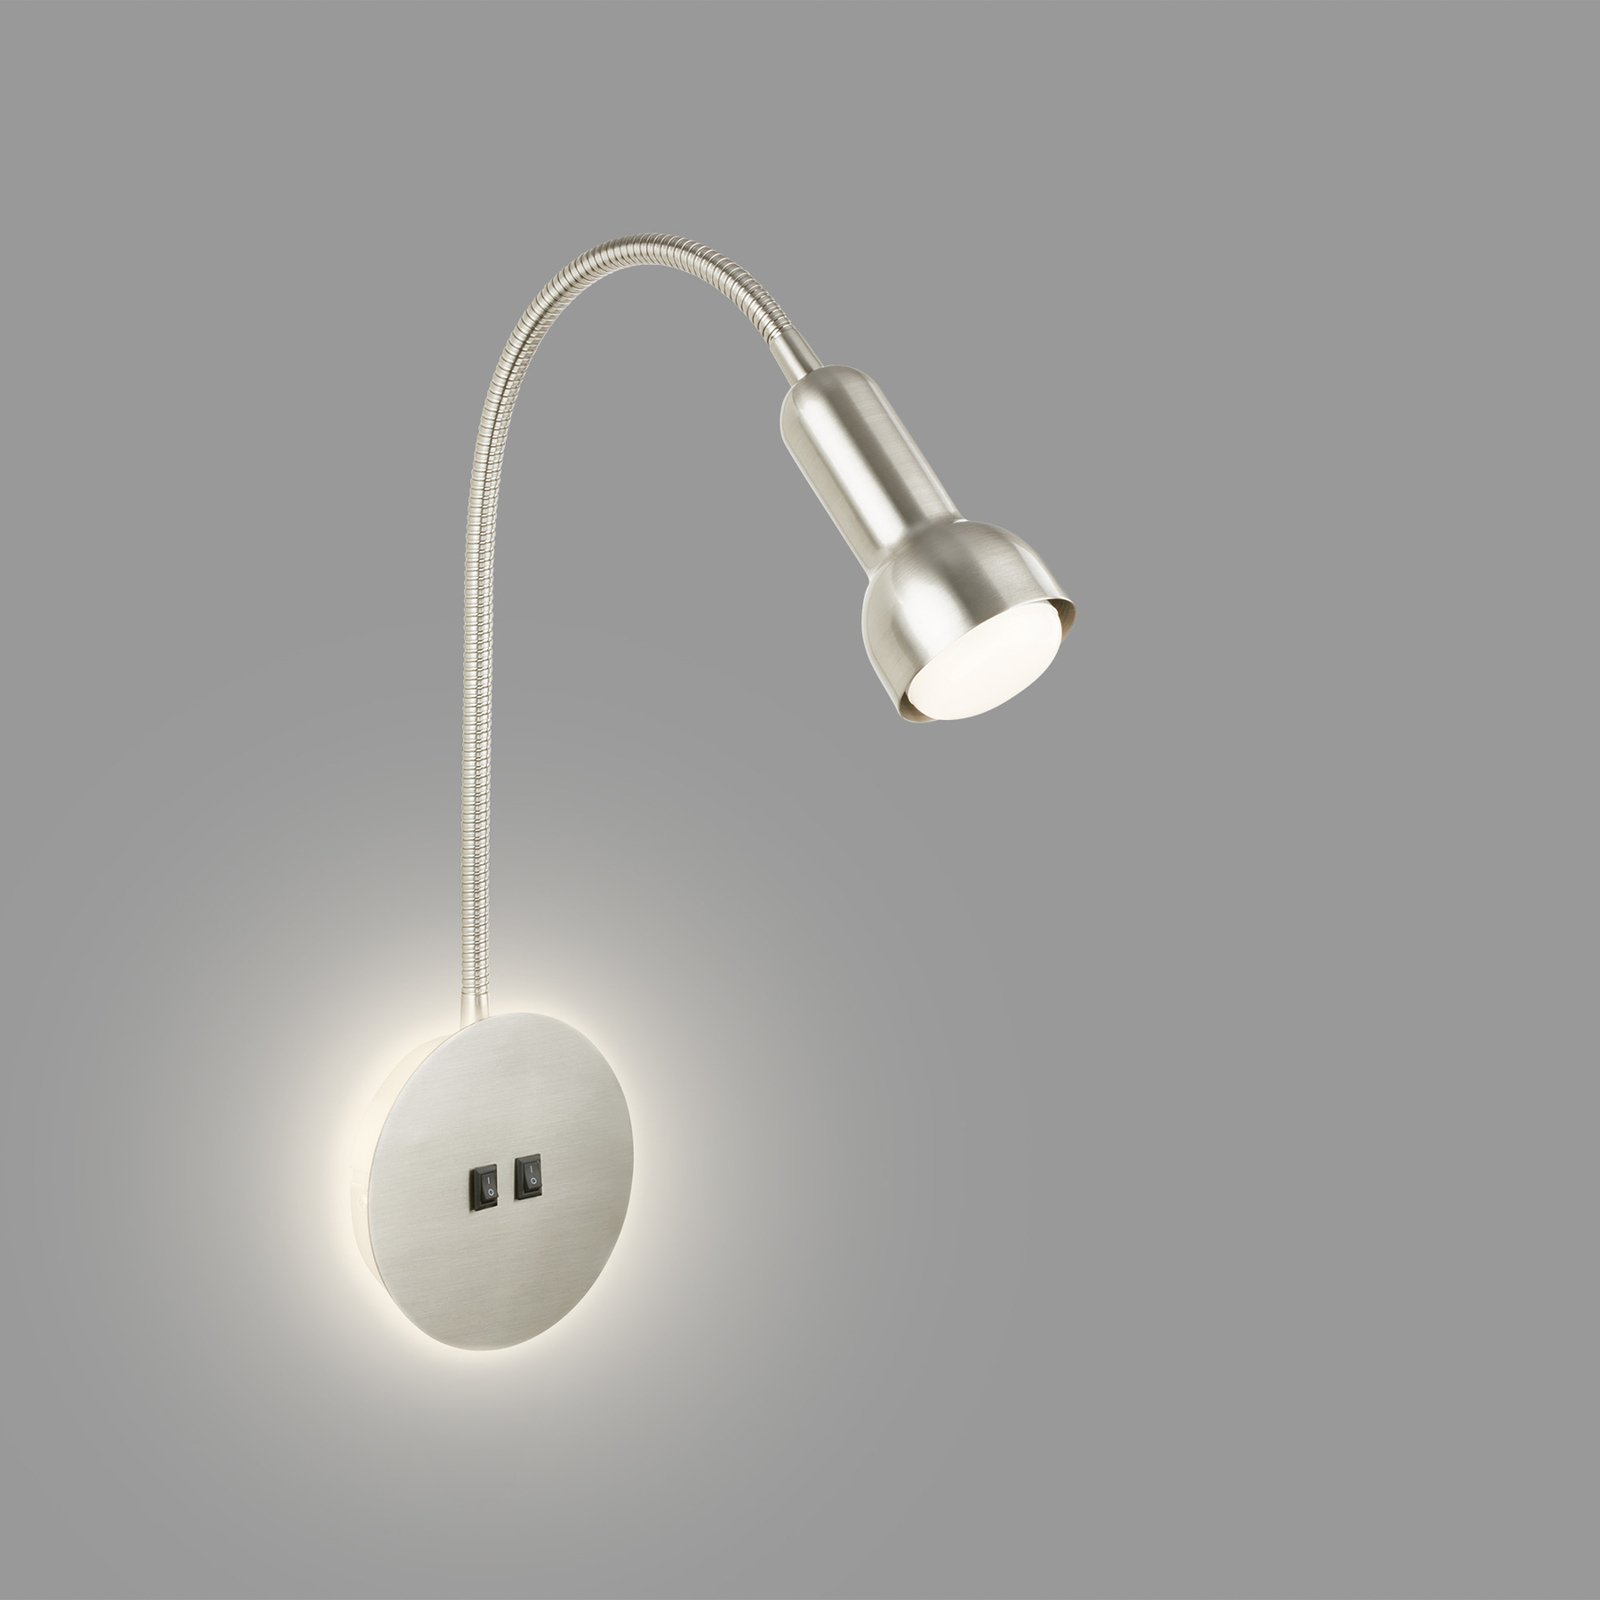 LED-Wandlampe 2178012 Double-Switch, nickel matt